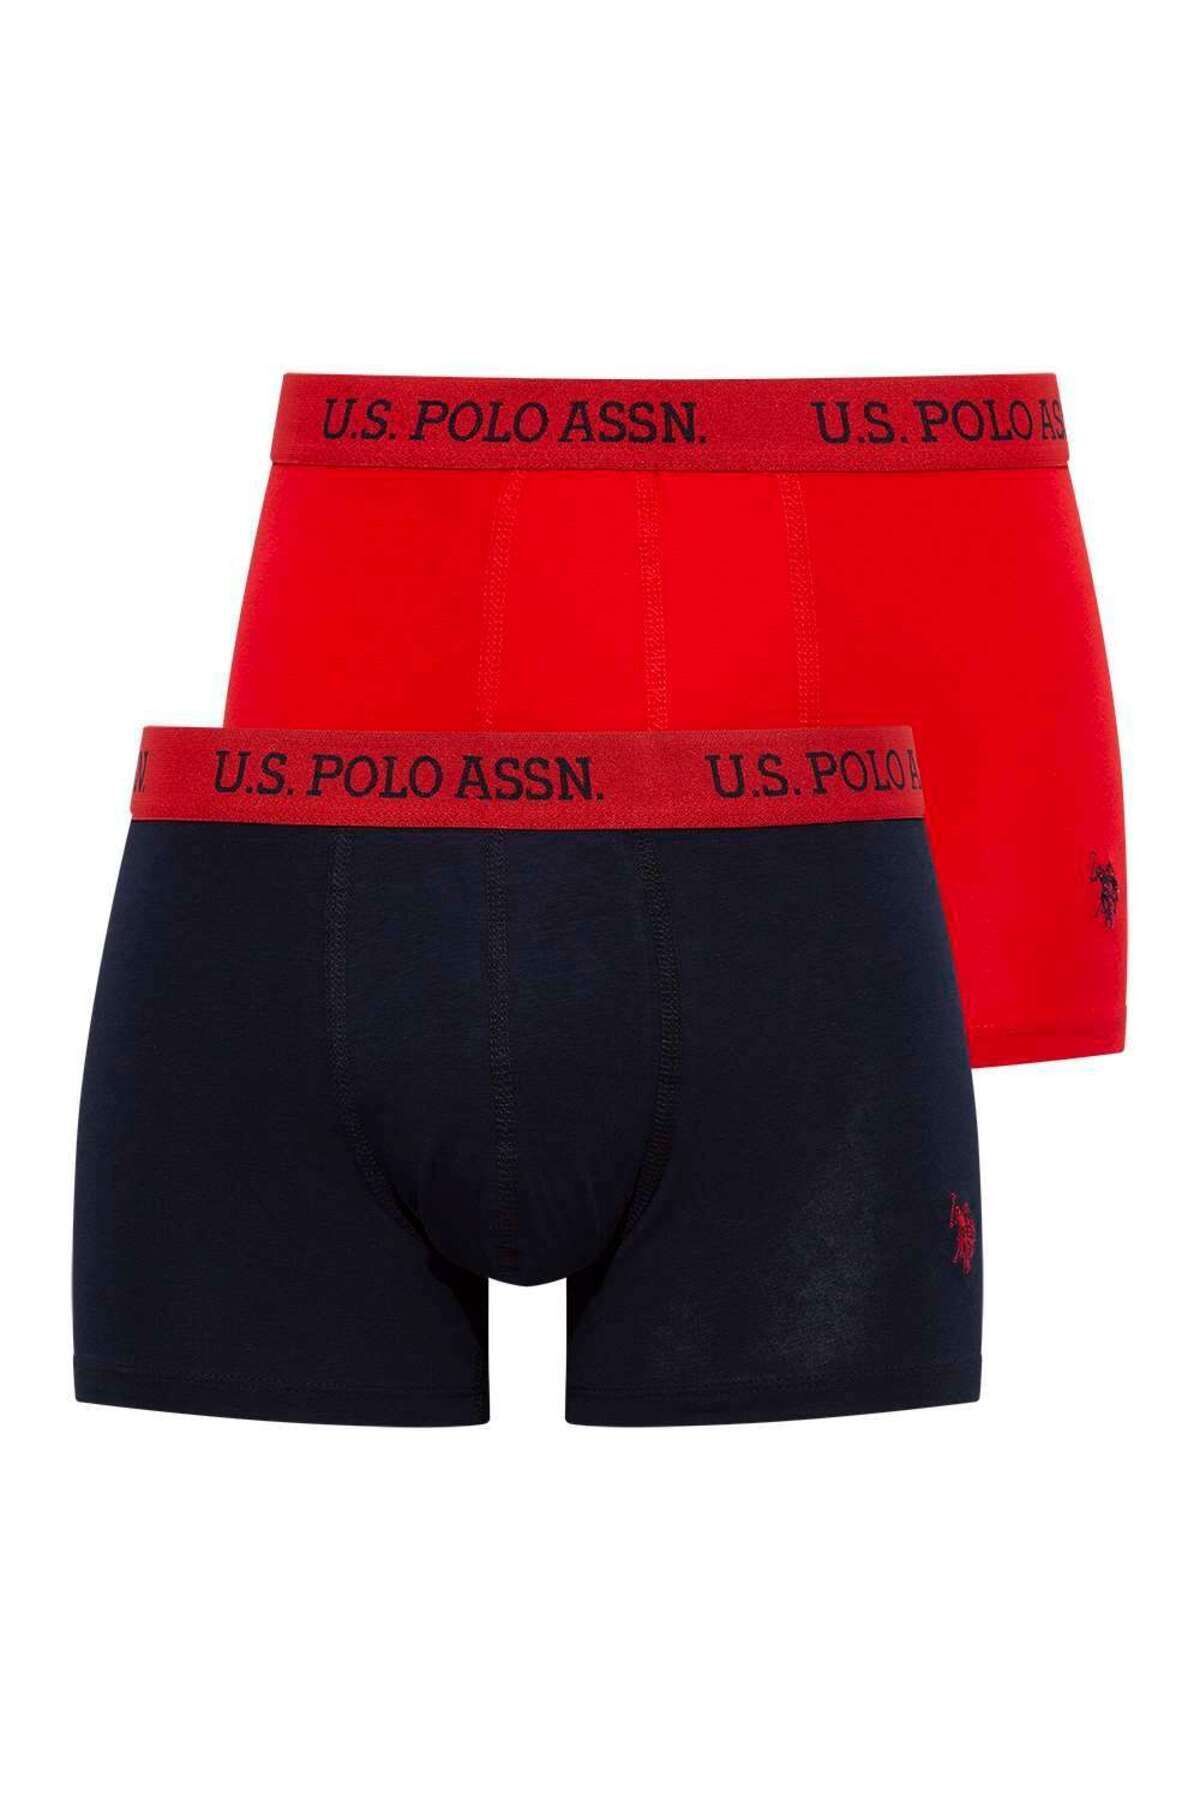 U.S. Polo Assn. Erkek Kırmızı - Lacivert 2 Li Boxer 80374